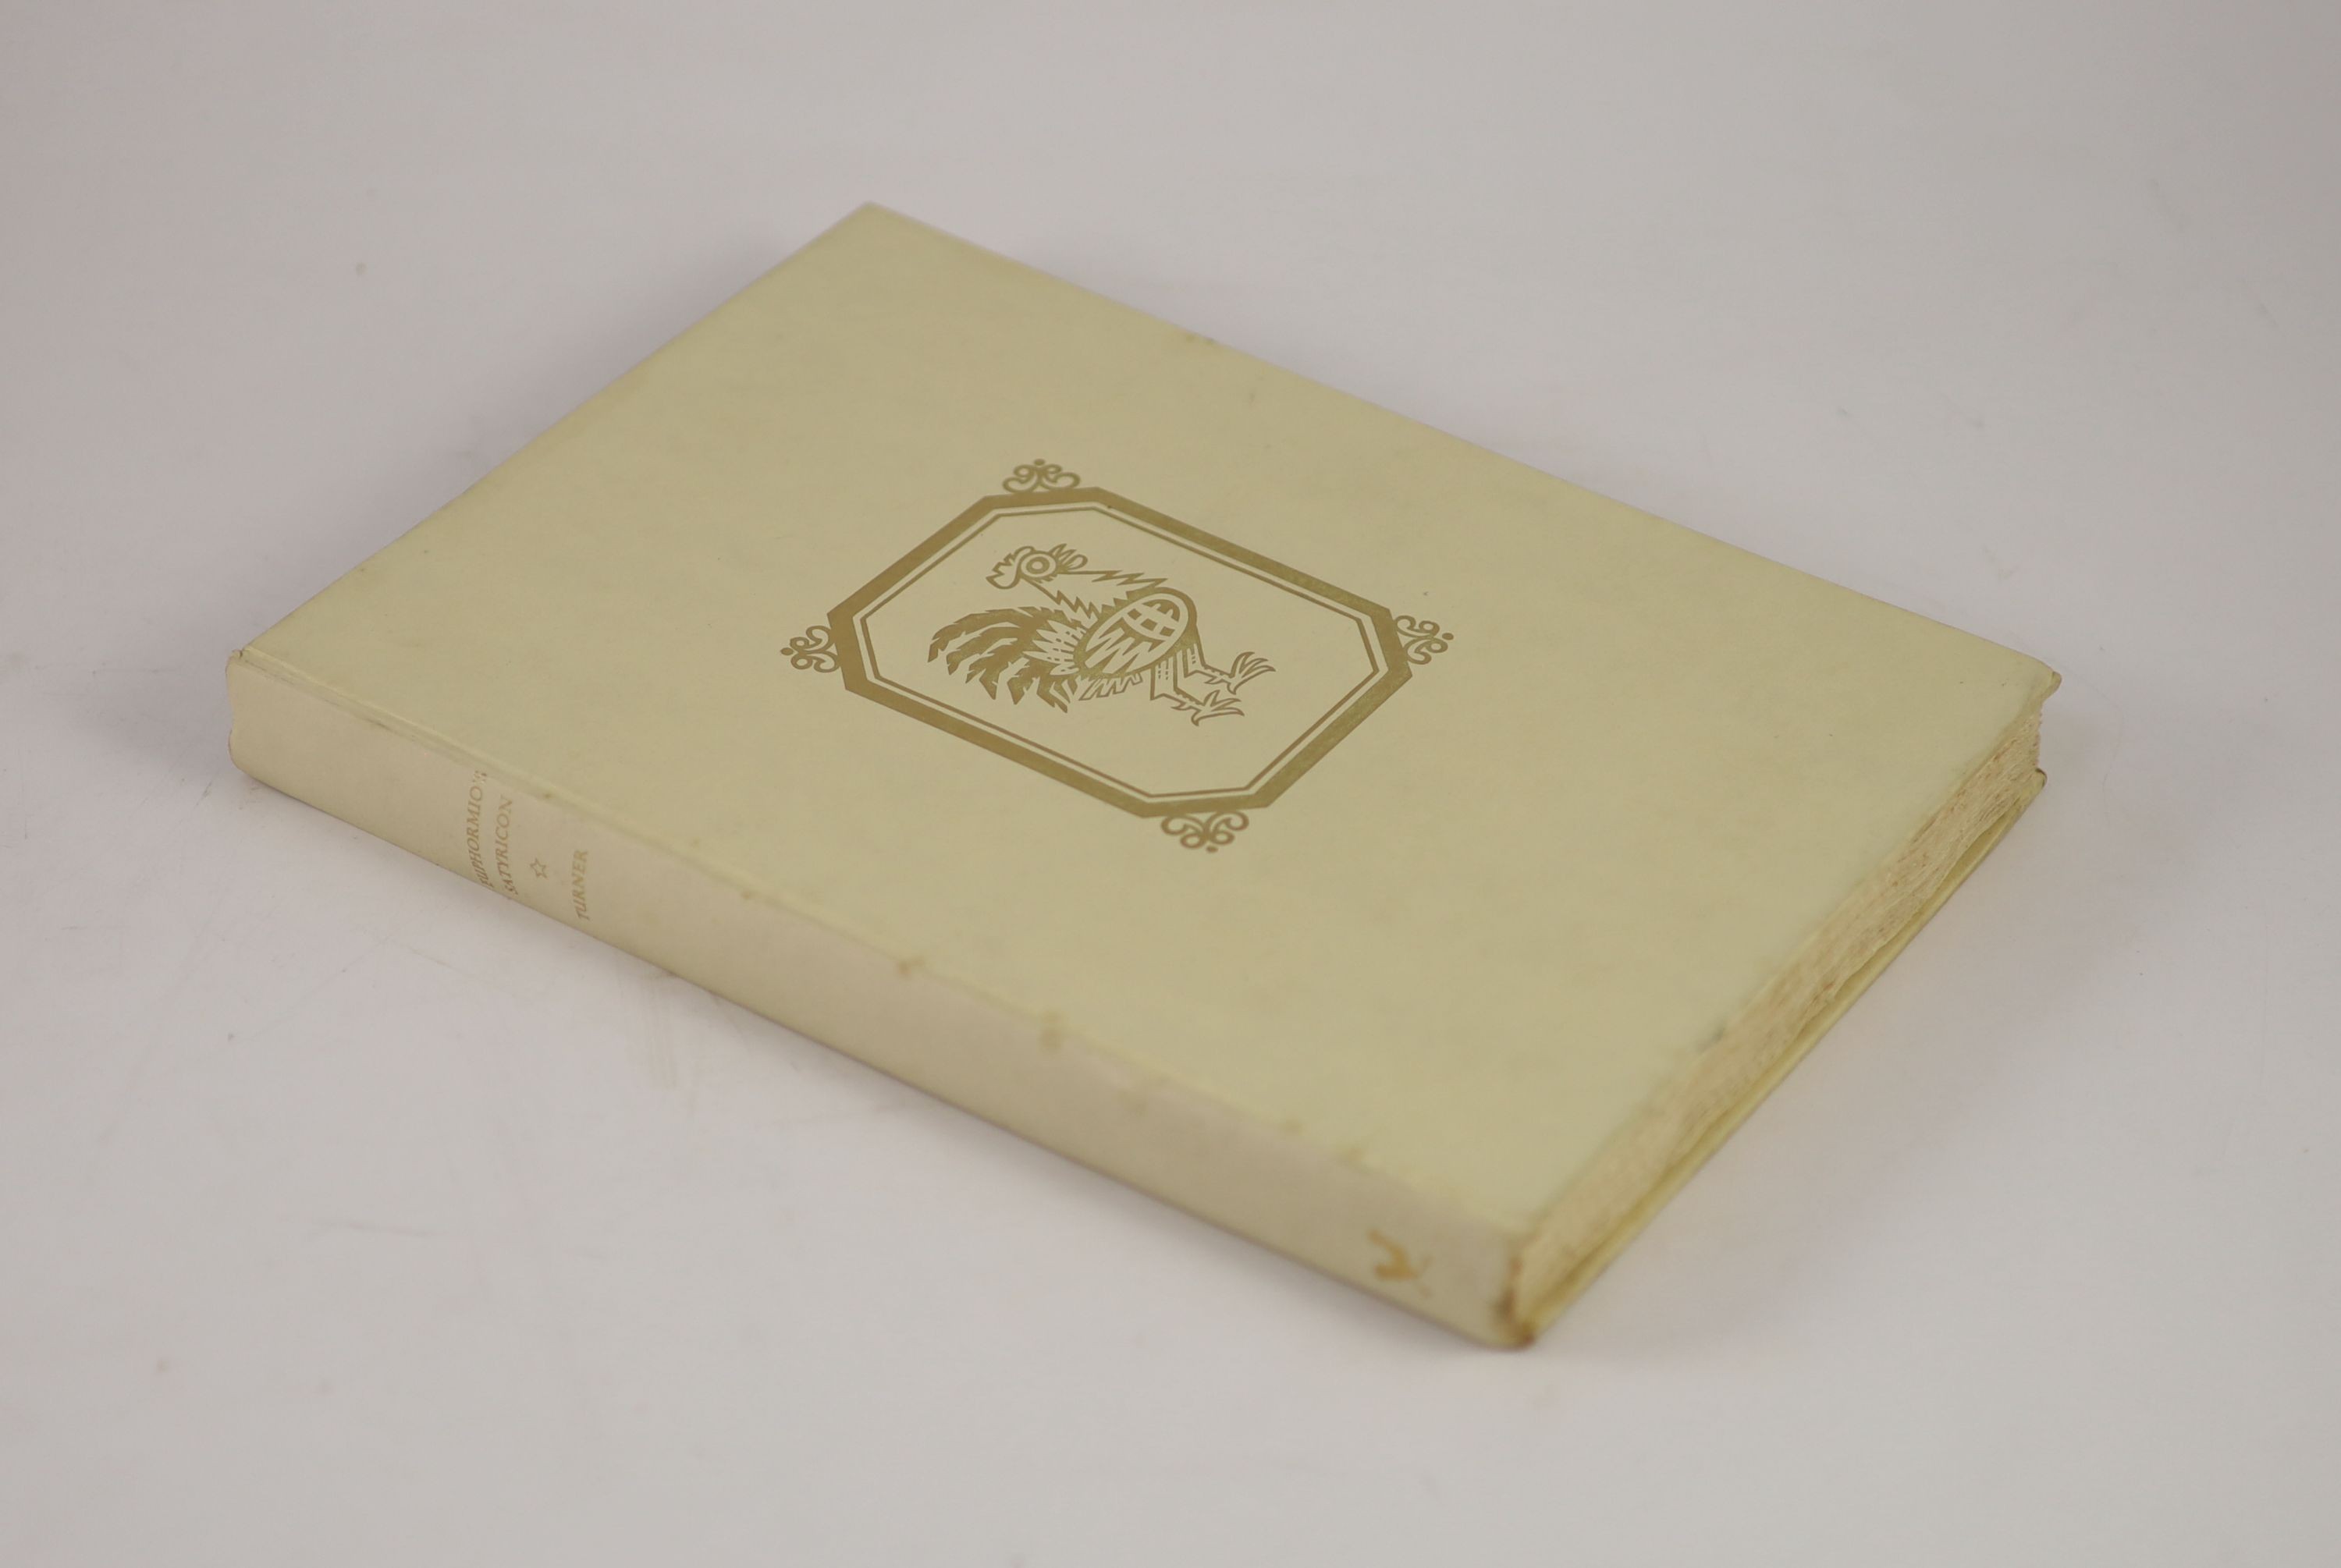 Golden Cockerel Press - Waltham Saint Lawrence, Berkshire - Barclay, John - Euphormio’s Satyricon, one of 260, with 10 engravings by Derrick Harris, 1954